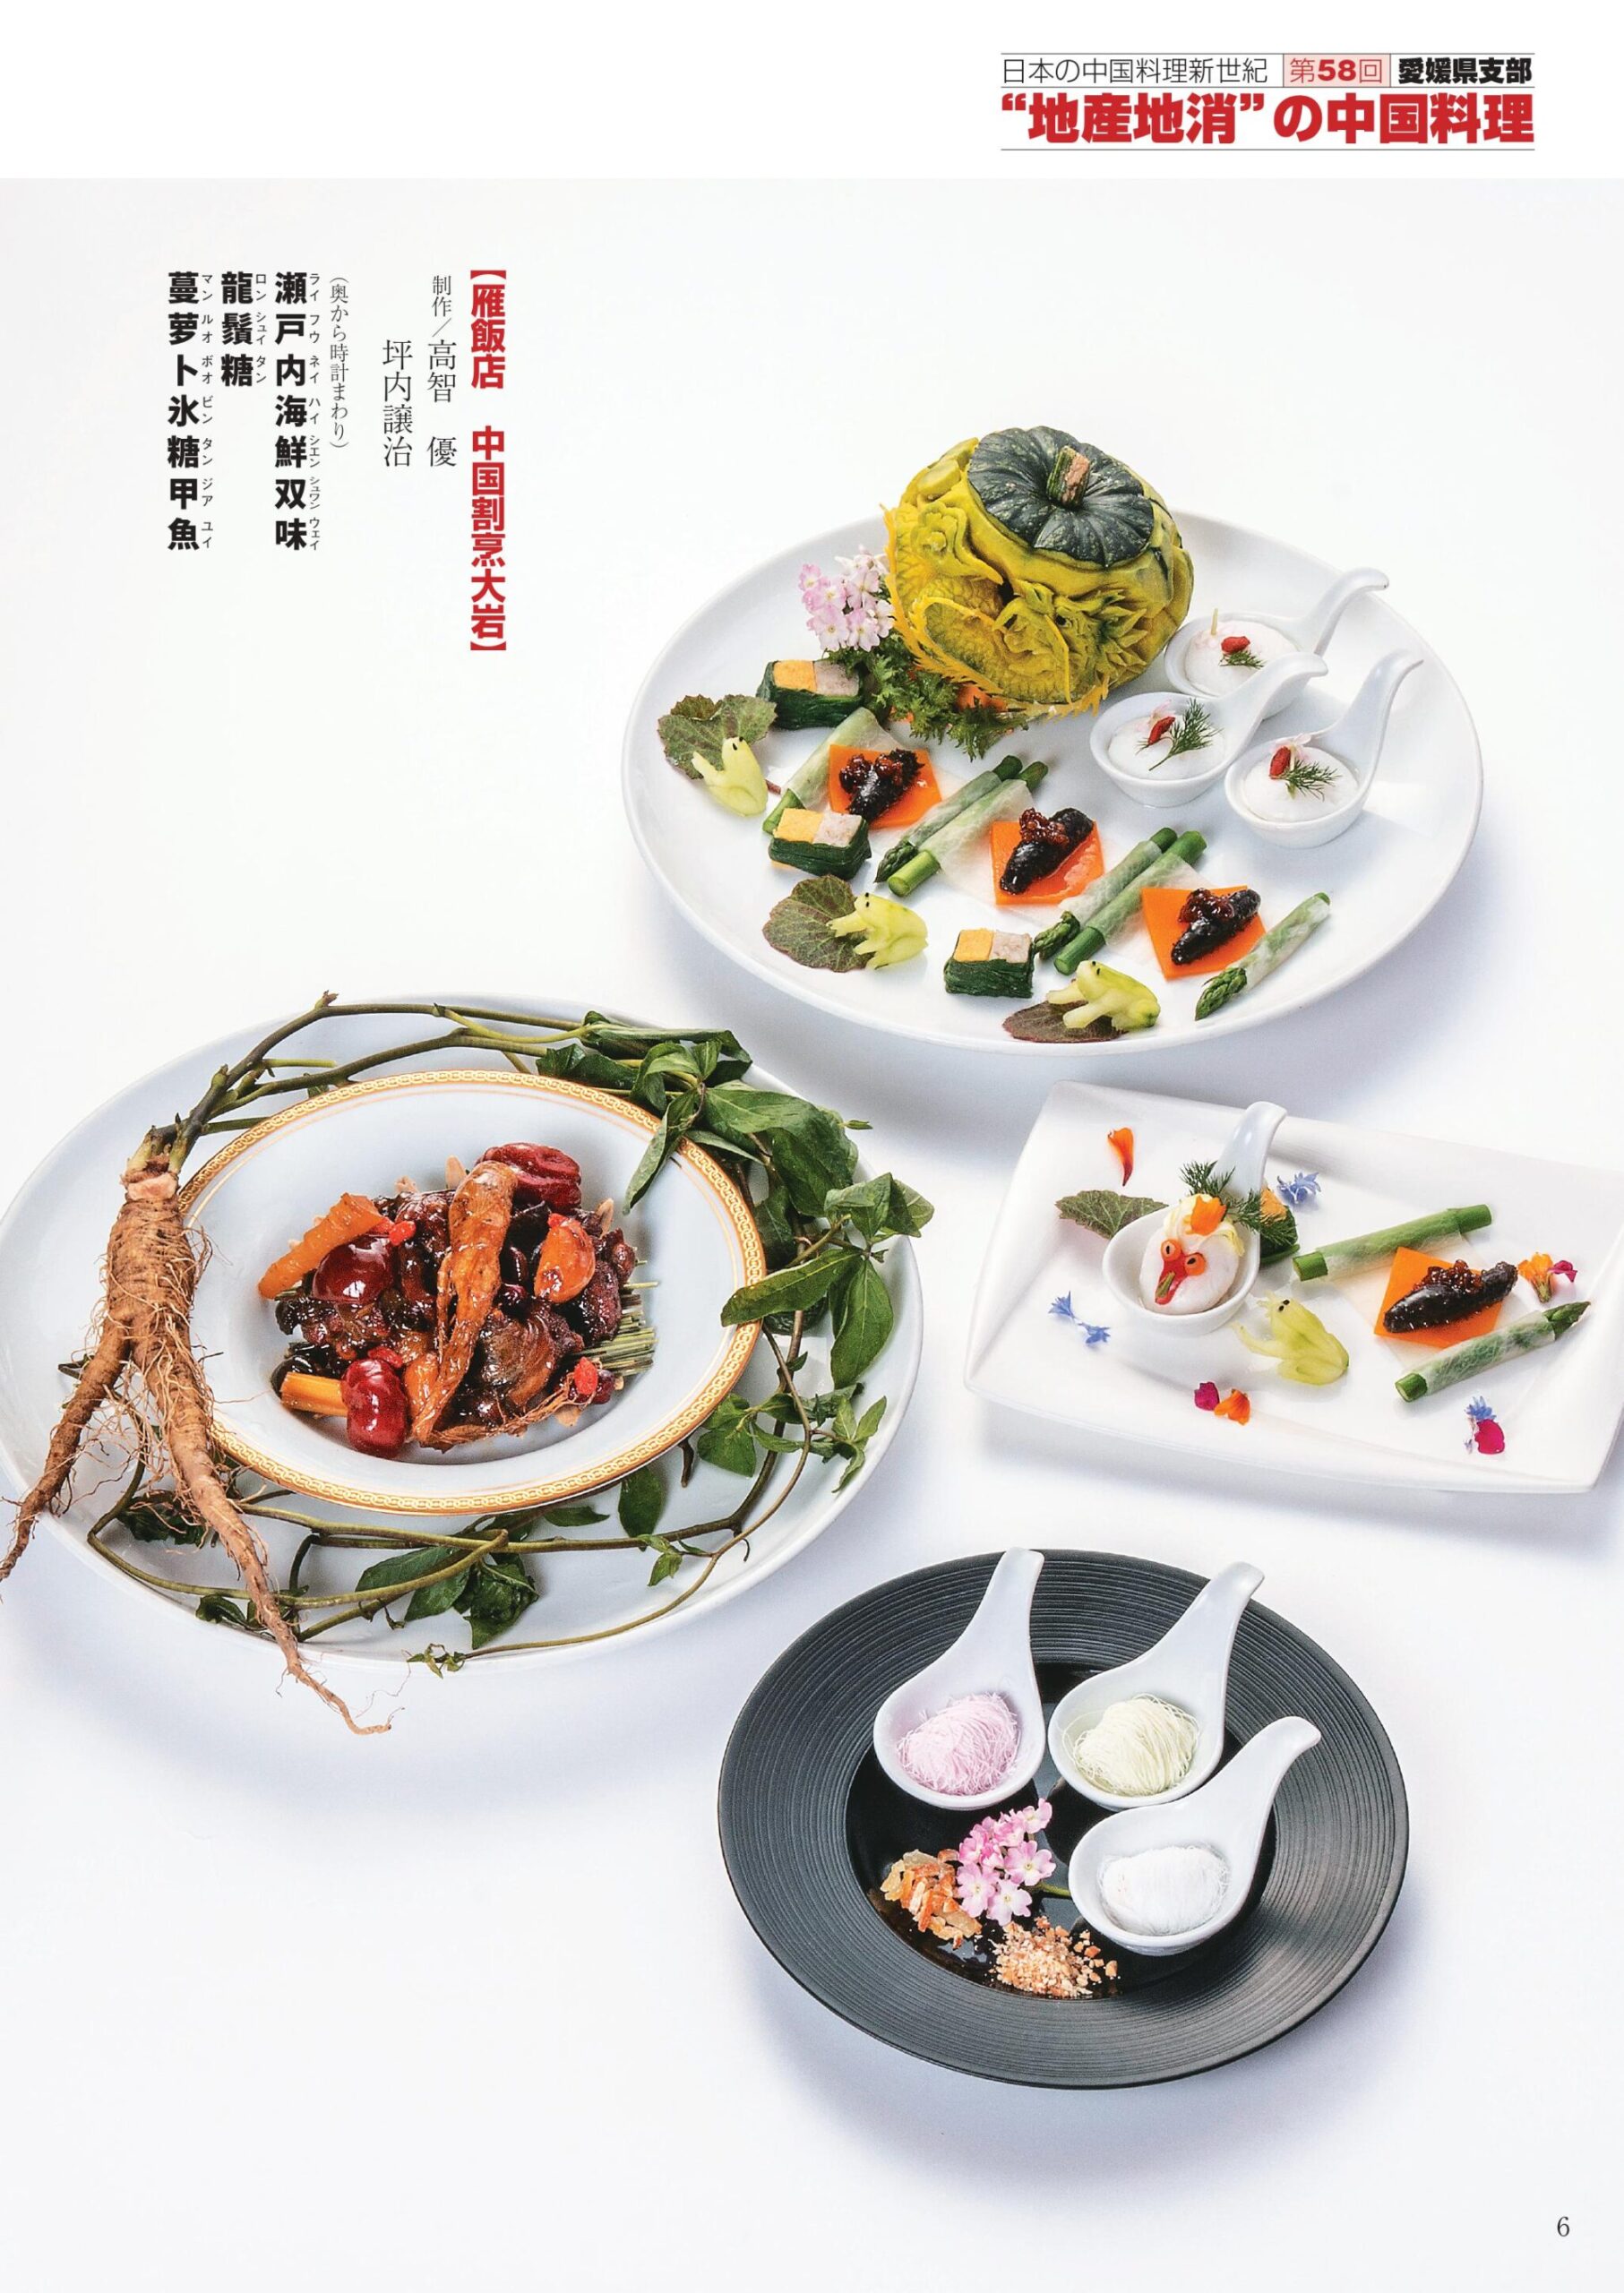 地産地消の中国料理-0003